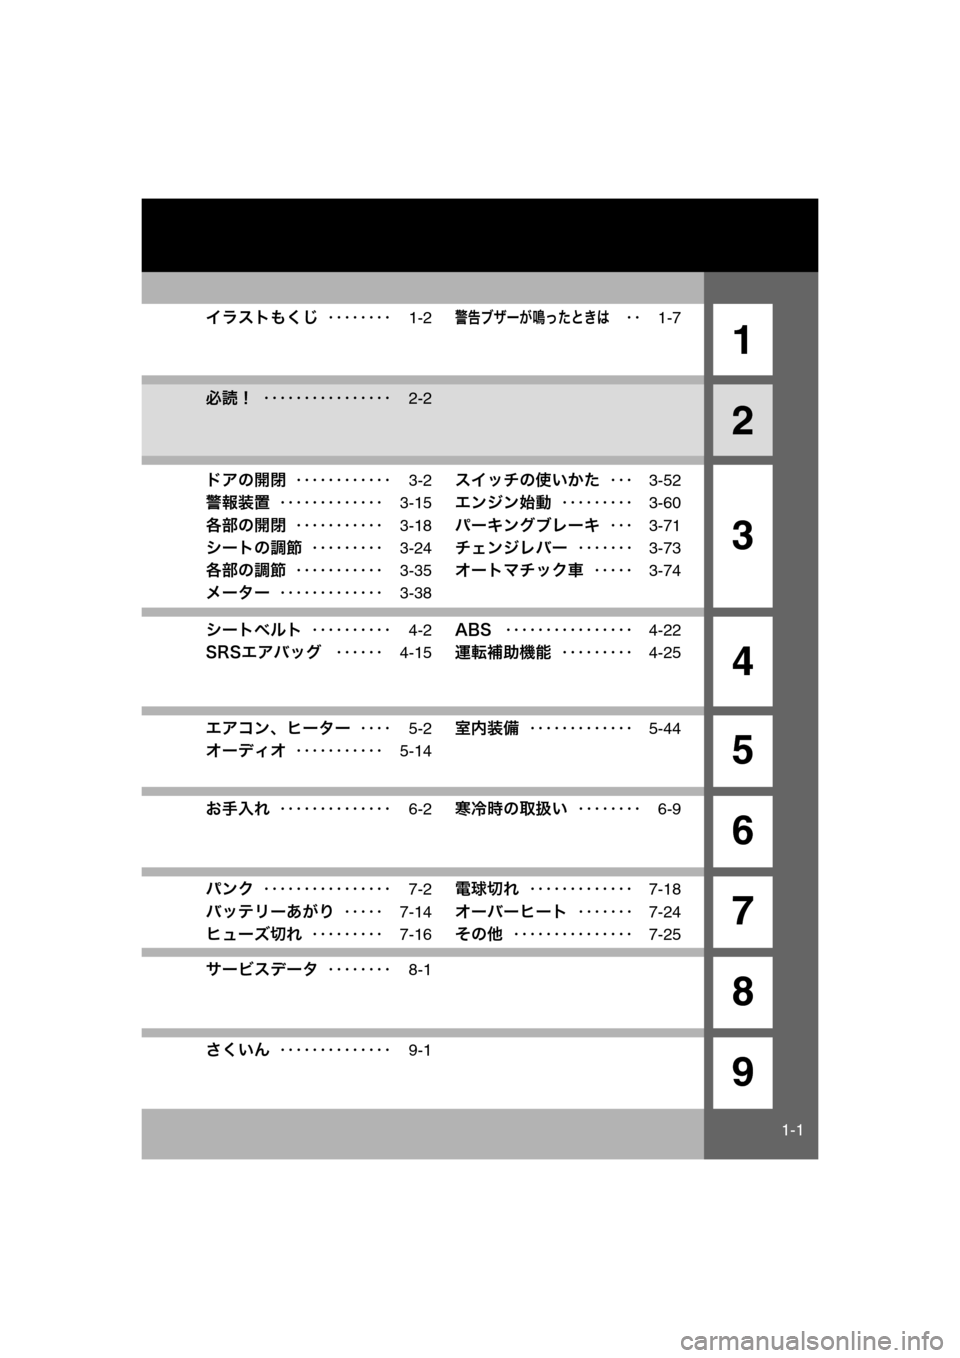 MAZDA MODEL AZ-WAGON 2011  取扱説明書 (in Japanese) 1-1
1
2
3
4
5
6
7
8
9
イラストもくじ ････････  1-2警告ブザーが鳴ったときは ･･  1-7
必読！  ････････････････  2-2
ドアの開�